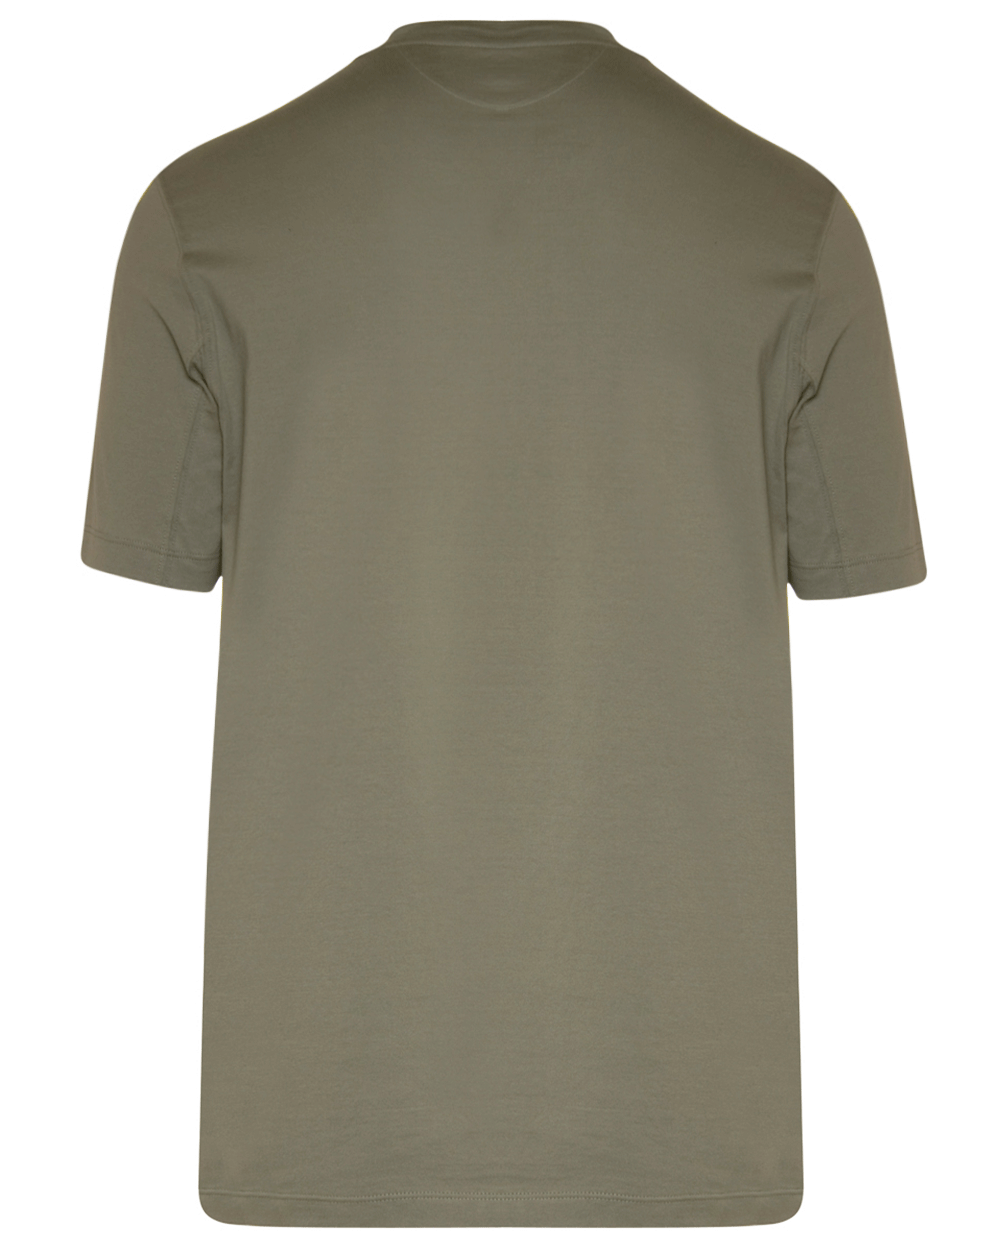 Sage Green Cotton T-Shirt